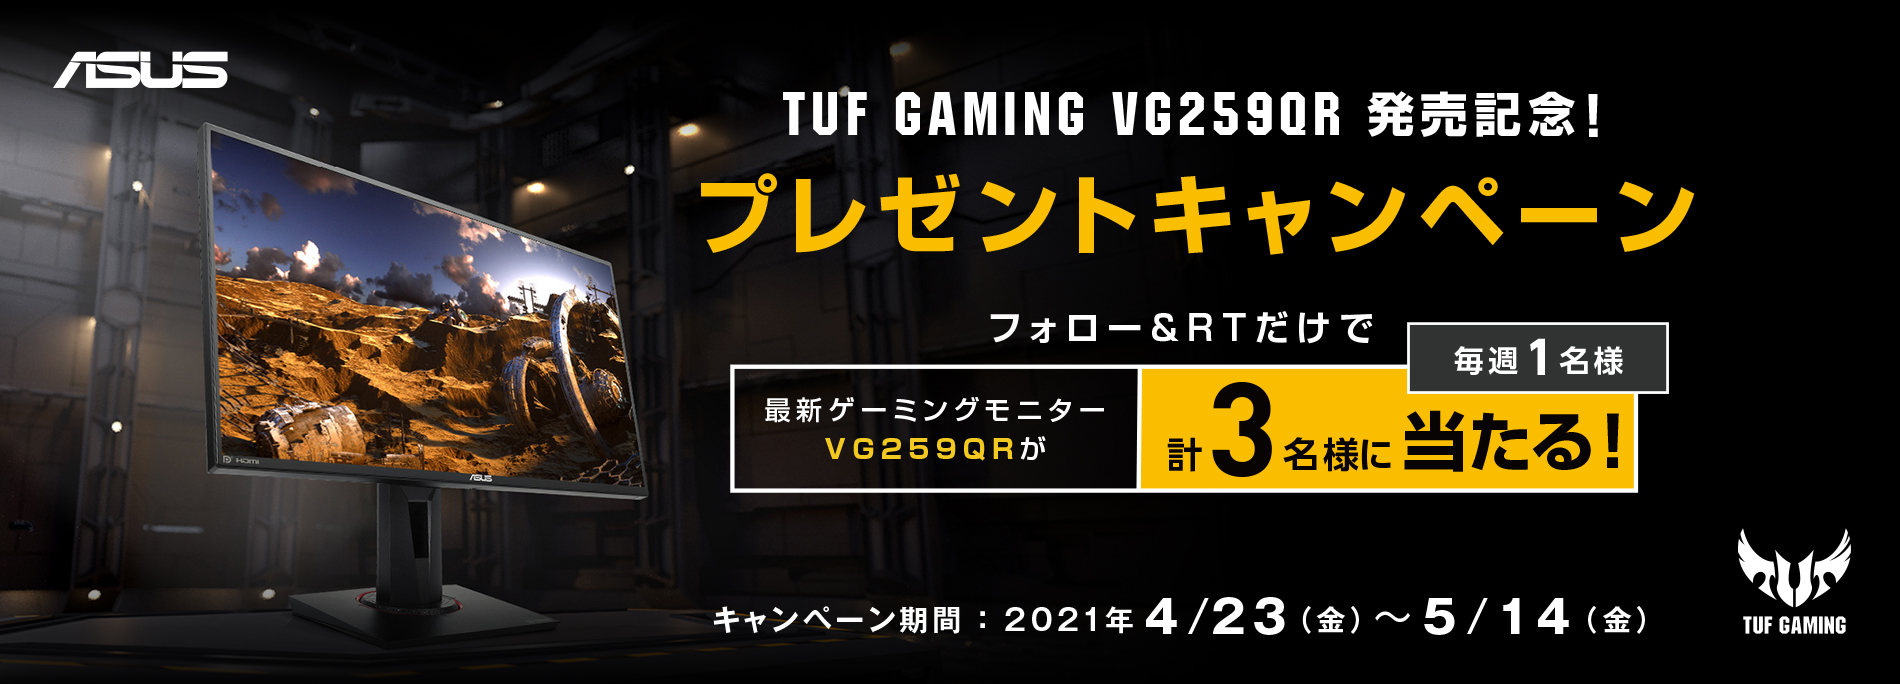 ASUS Event -「TUF GAMING VG259QR」ゲーミングモニターが毎週当たる